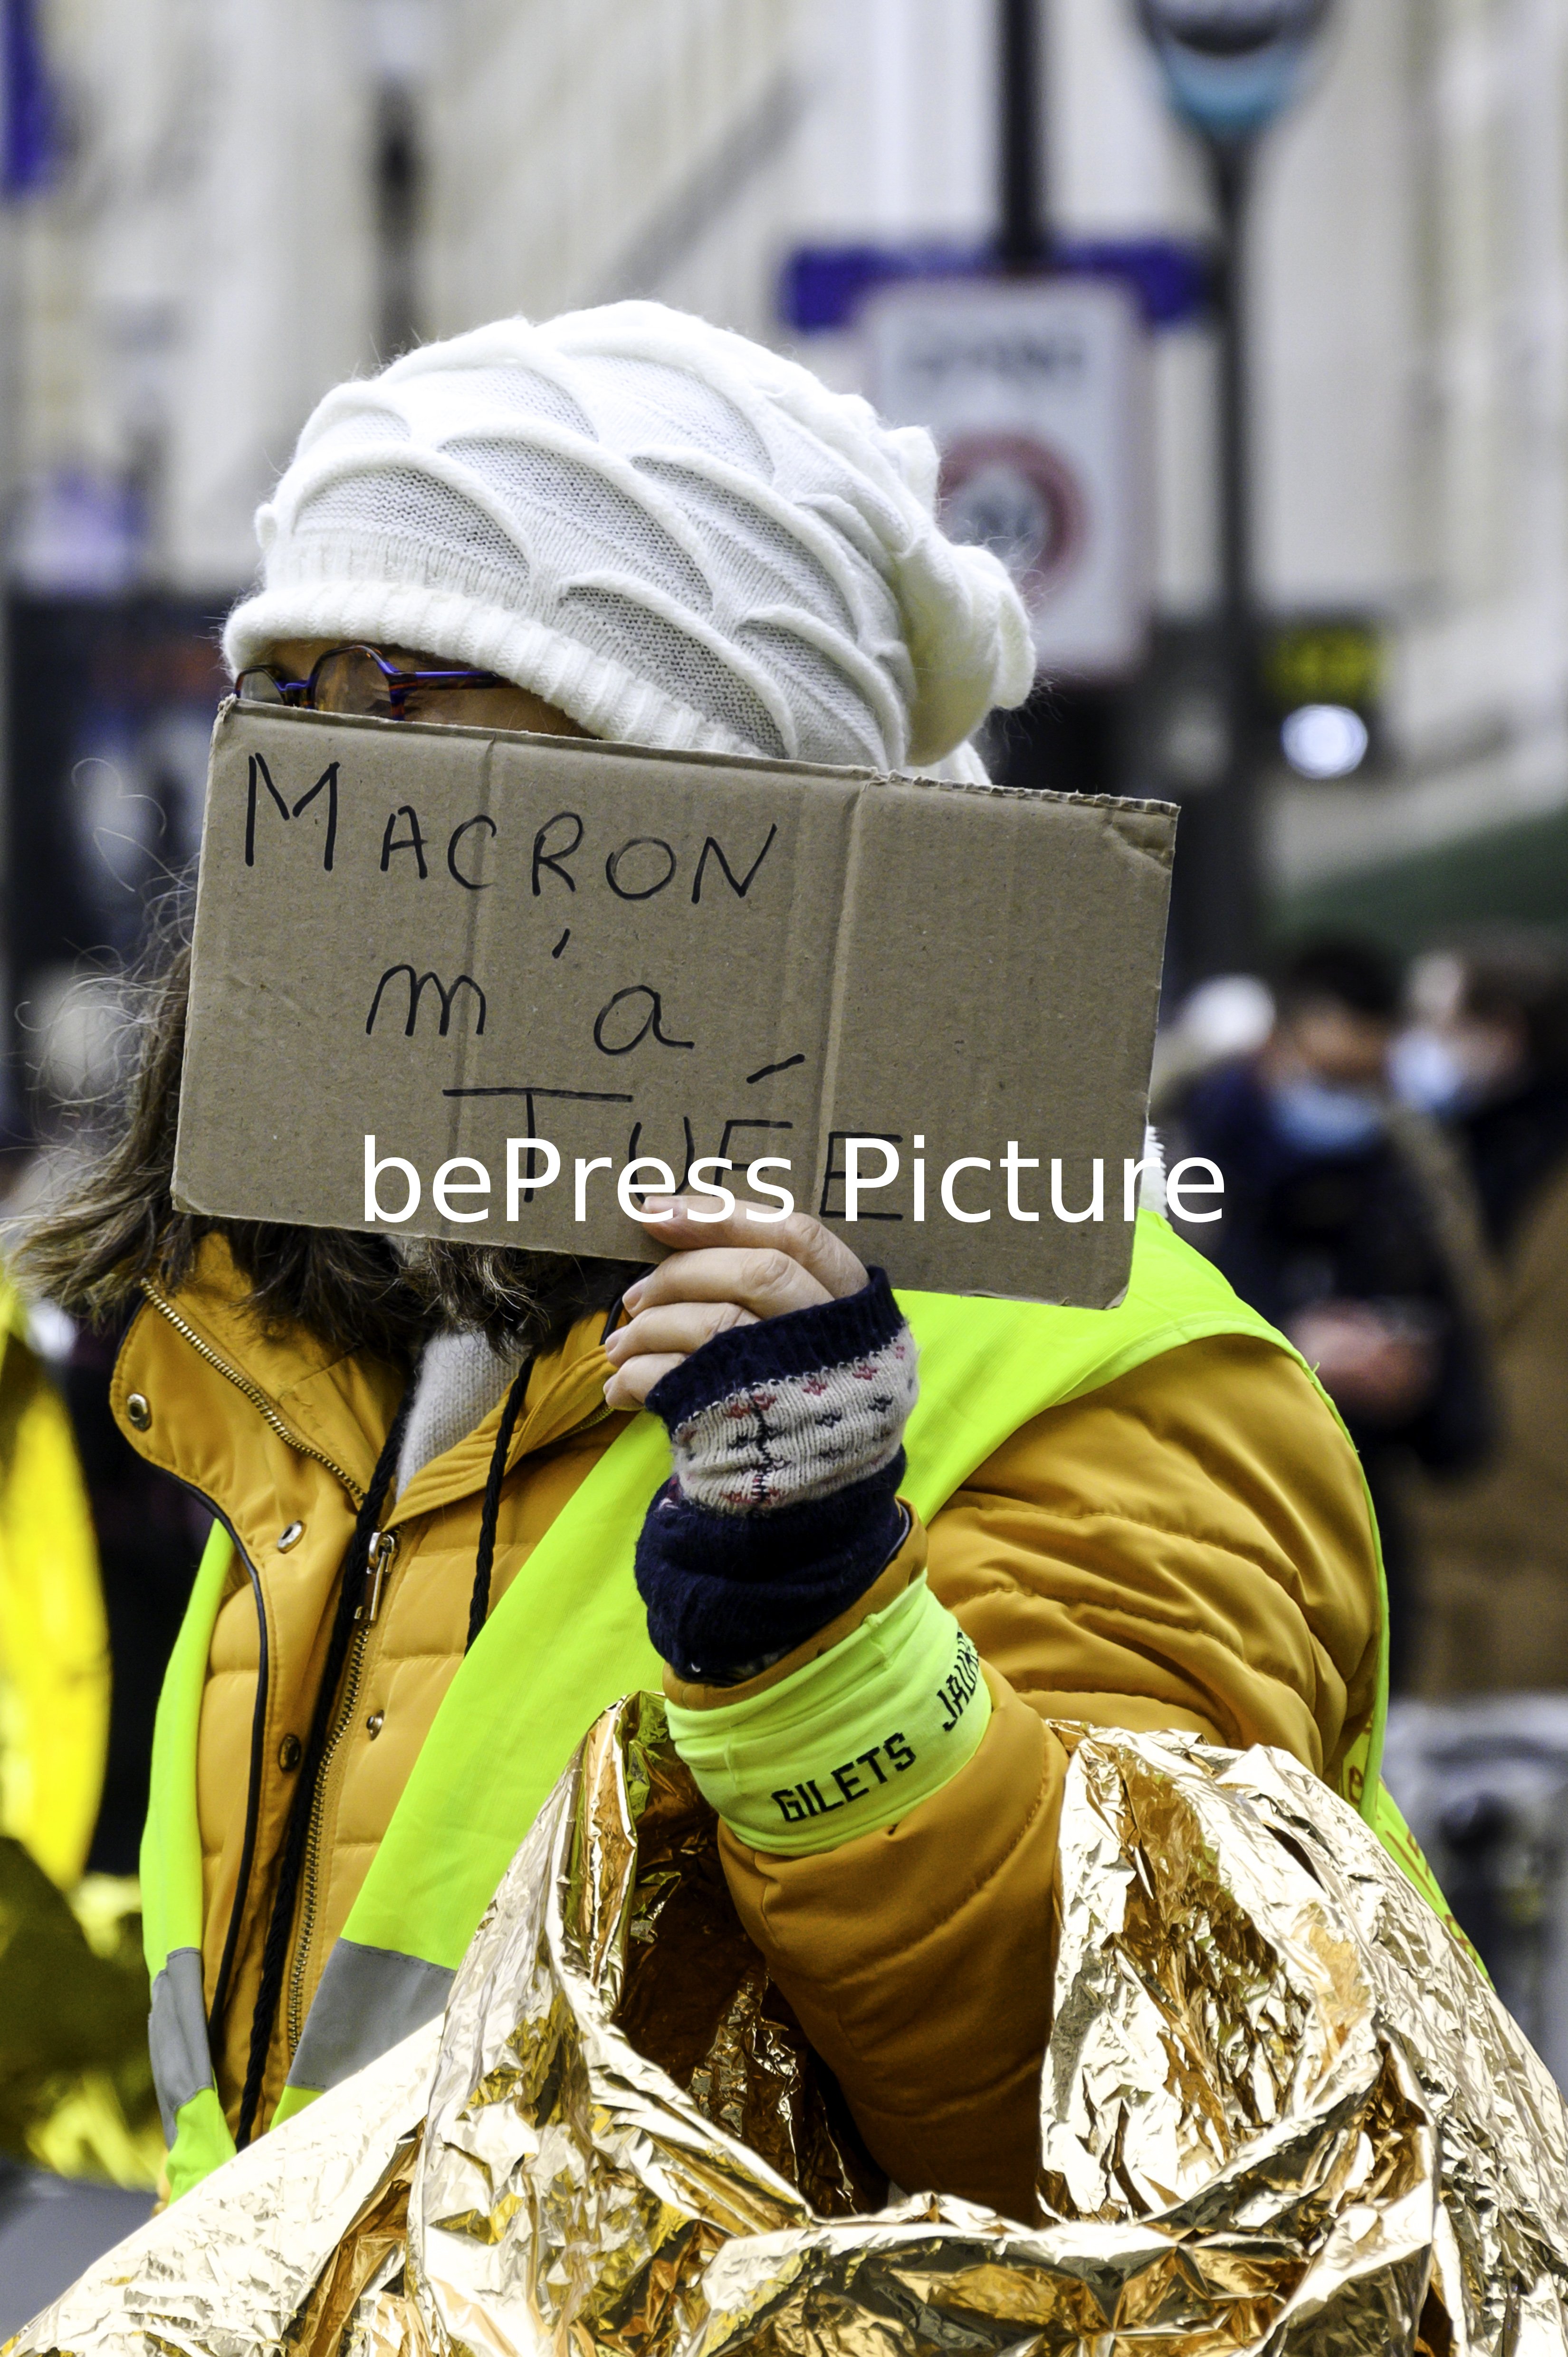 FRANCE : PARIS MANIFESTATION DU SYSTEME EDUCATIF - PROTEST OF THE NATIONAL EDUCATION SYSTEM